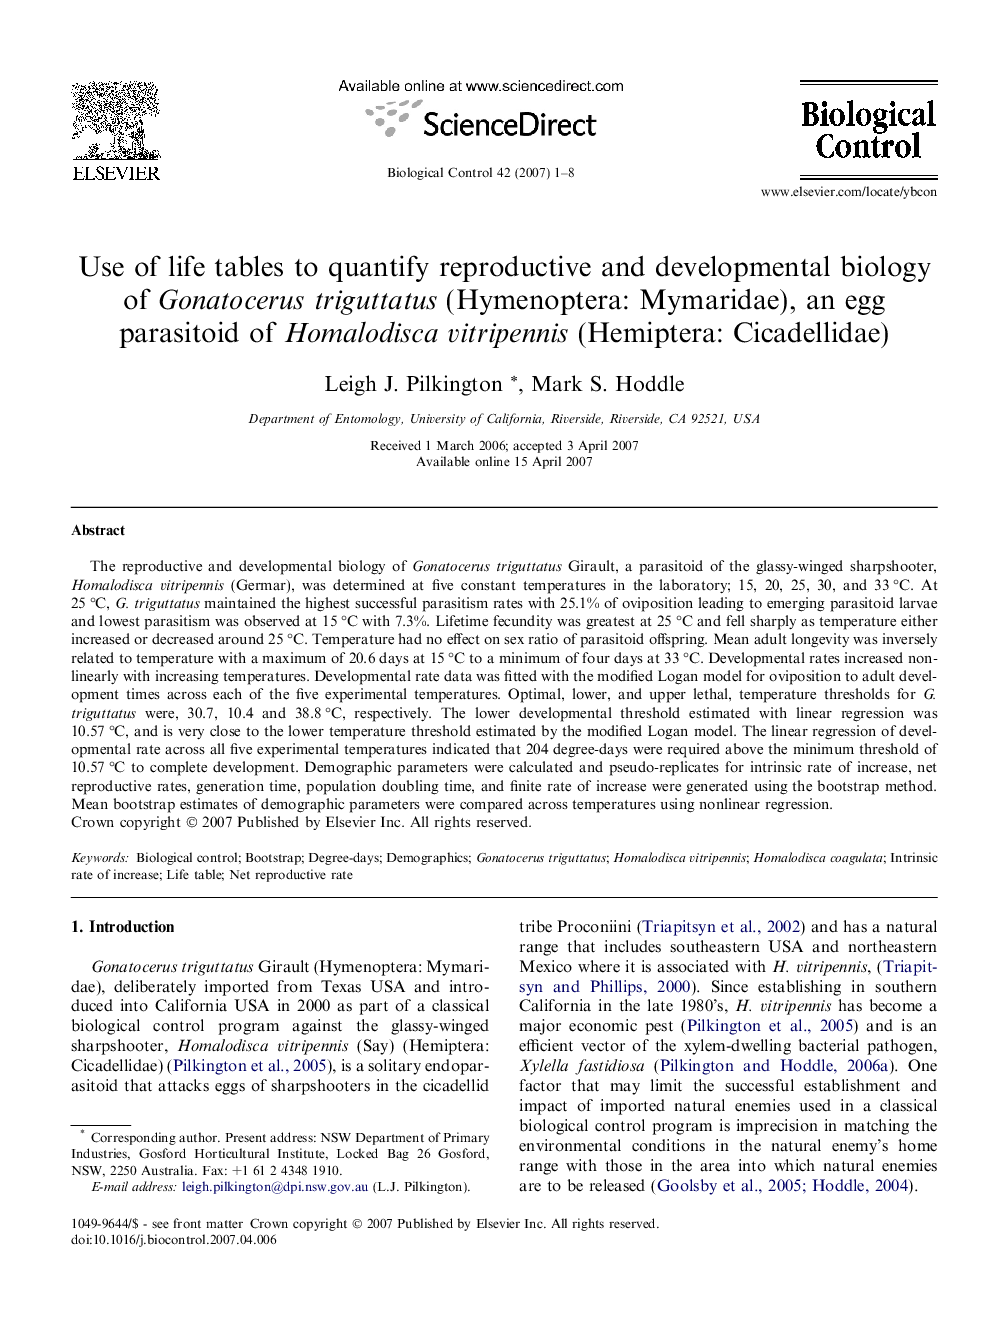 Use of life tables to quantify reproductive and developmental biology of Gonatocerus triguttatus (Hymenoptera: Mymaridae), an egg parasitoid of Homalodisca vitripennis (Hemiptera: Cicadellidae)